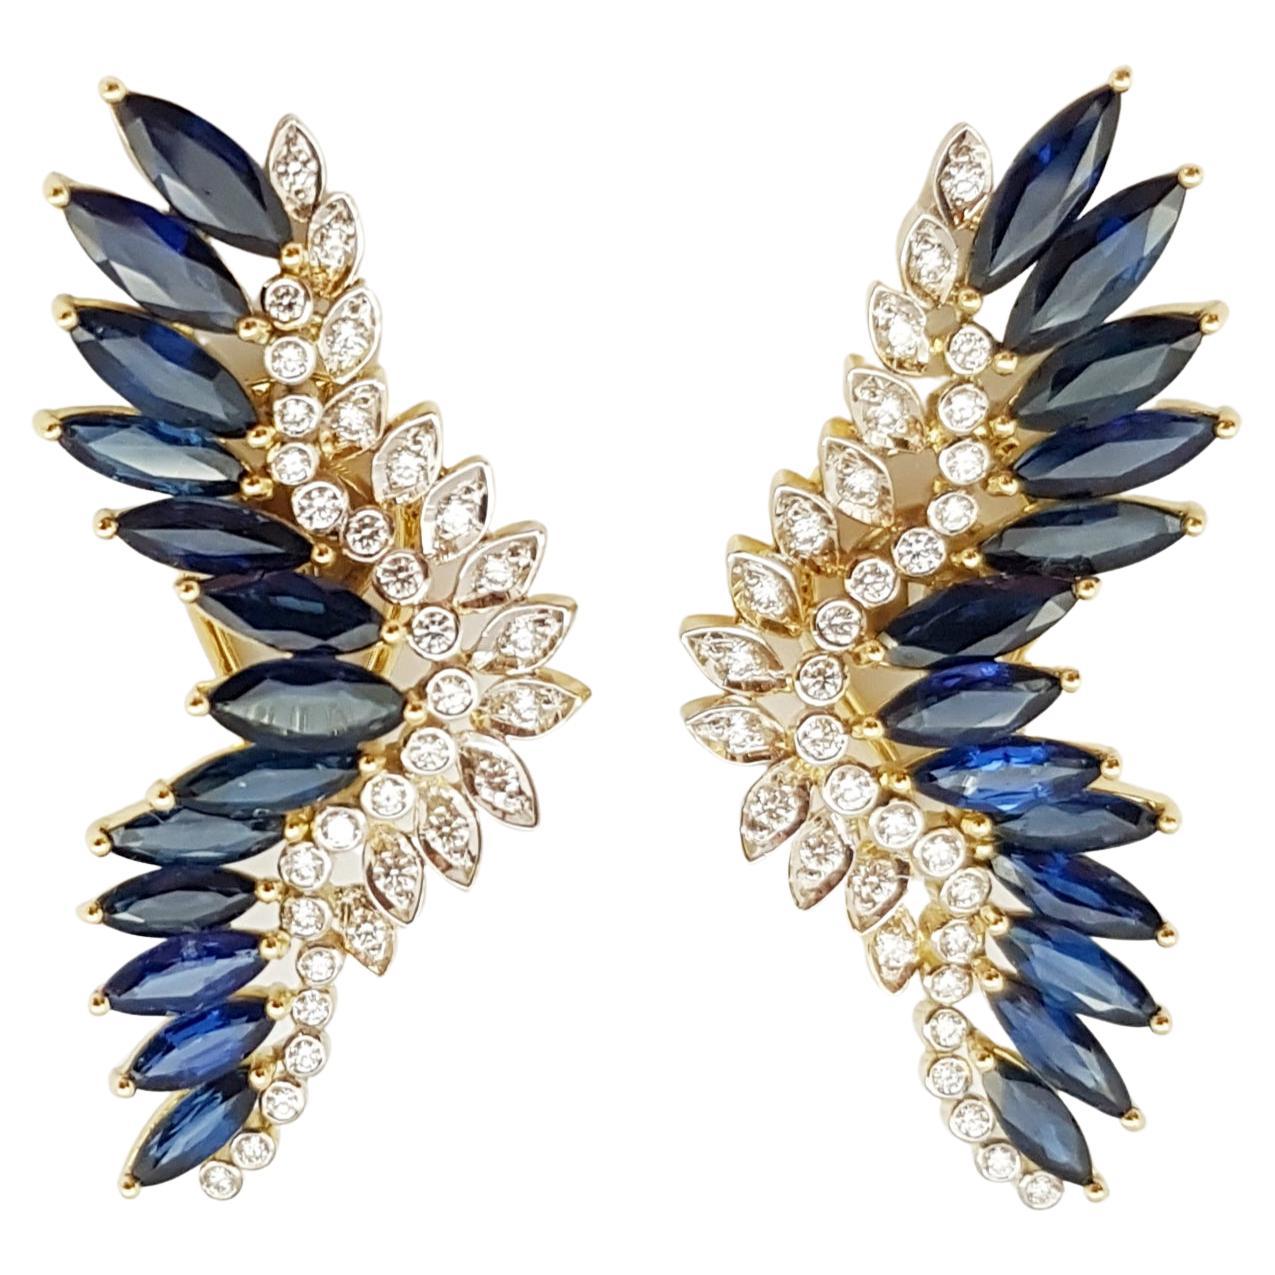 Blue Sapphire and Diamond Earrings Set in 18 Karat Gold Settings